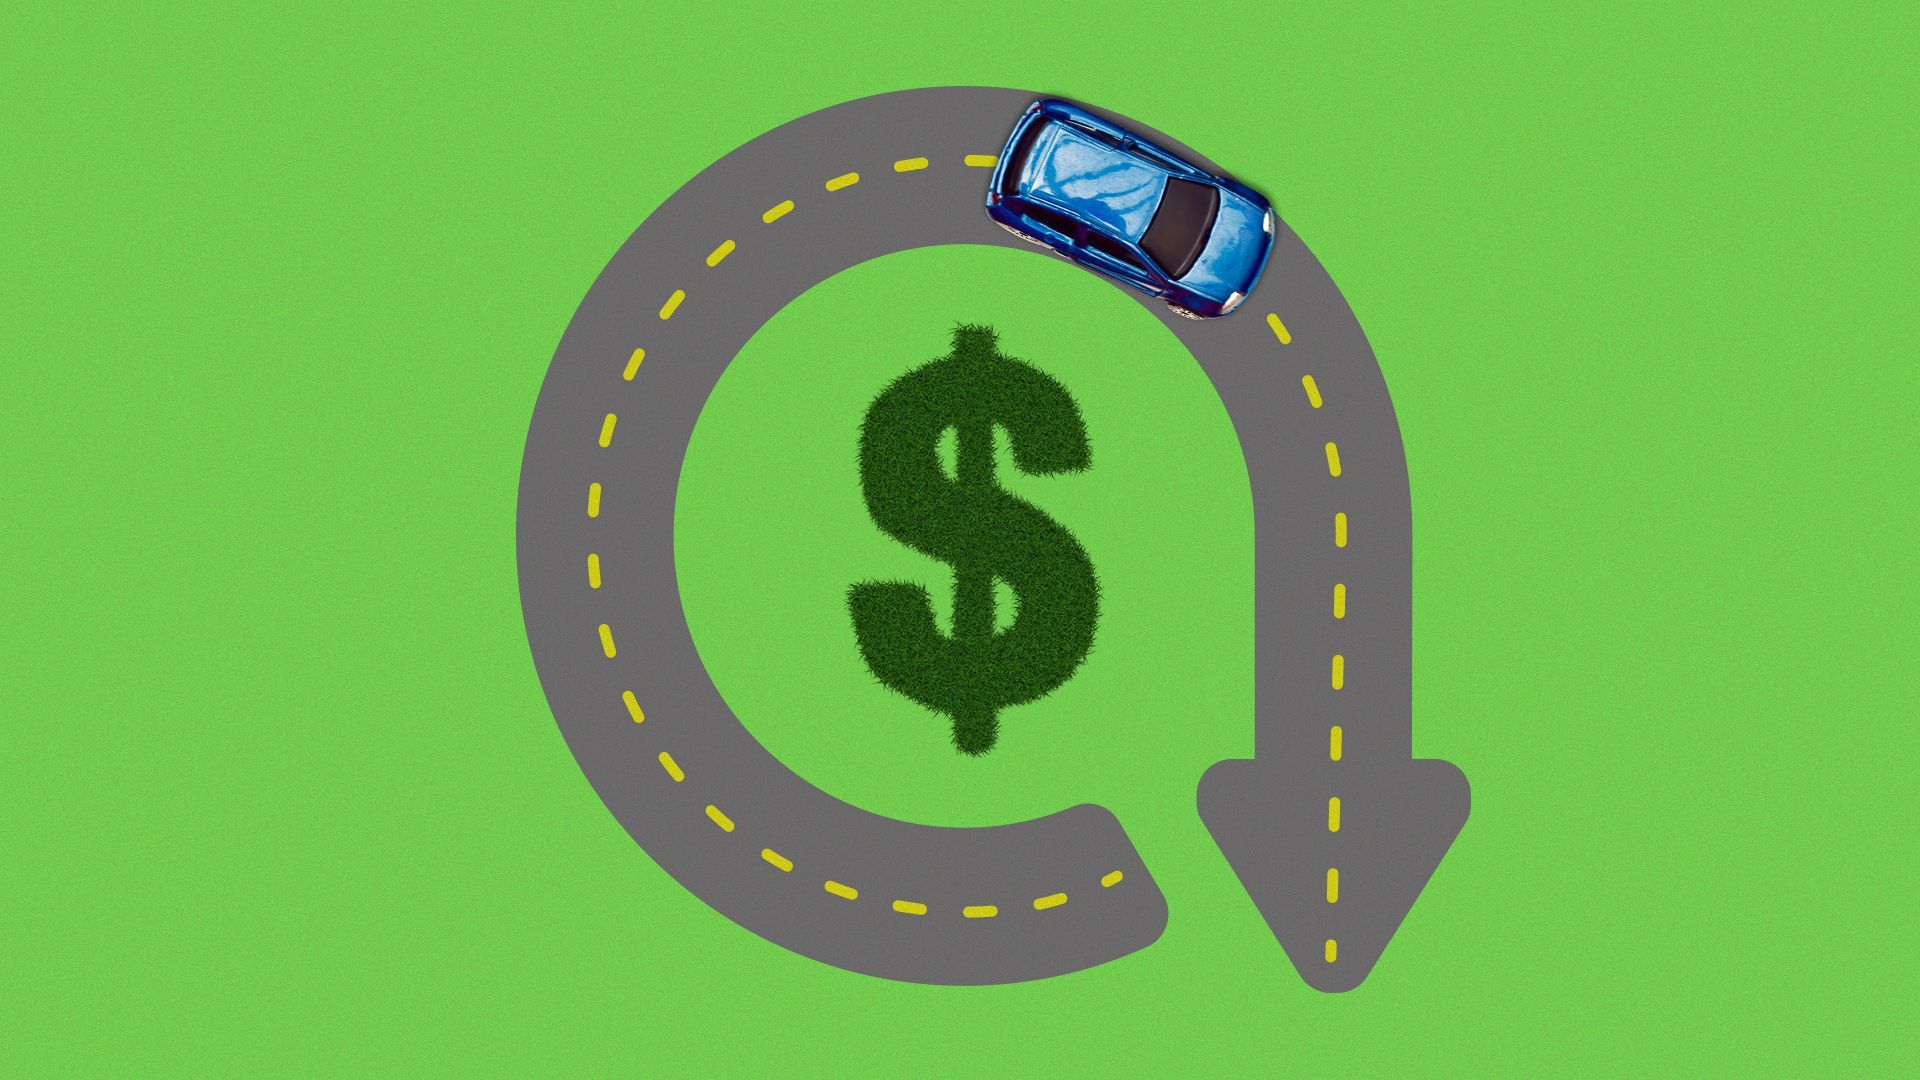 An illustration of a car circling a dollar sign symbol.